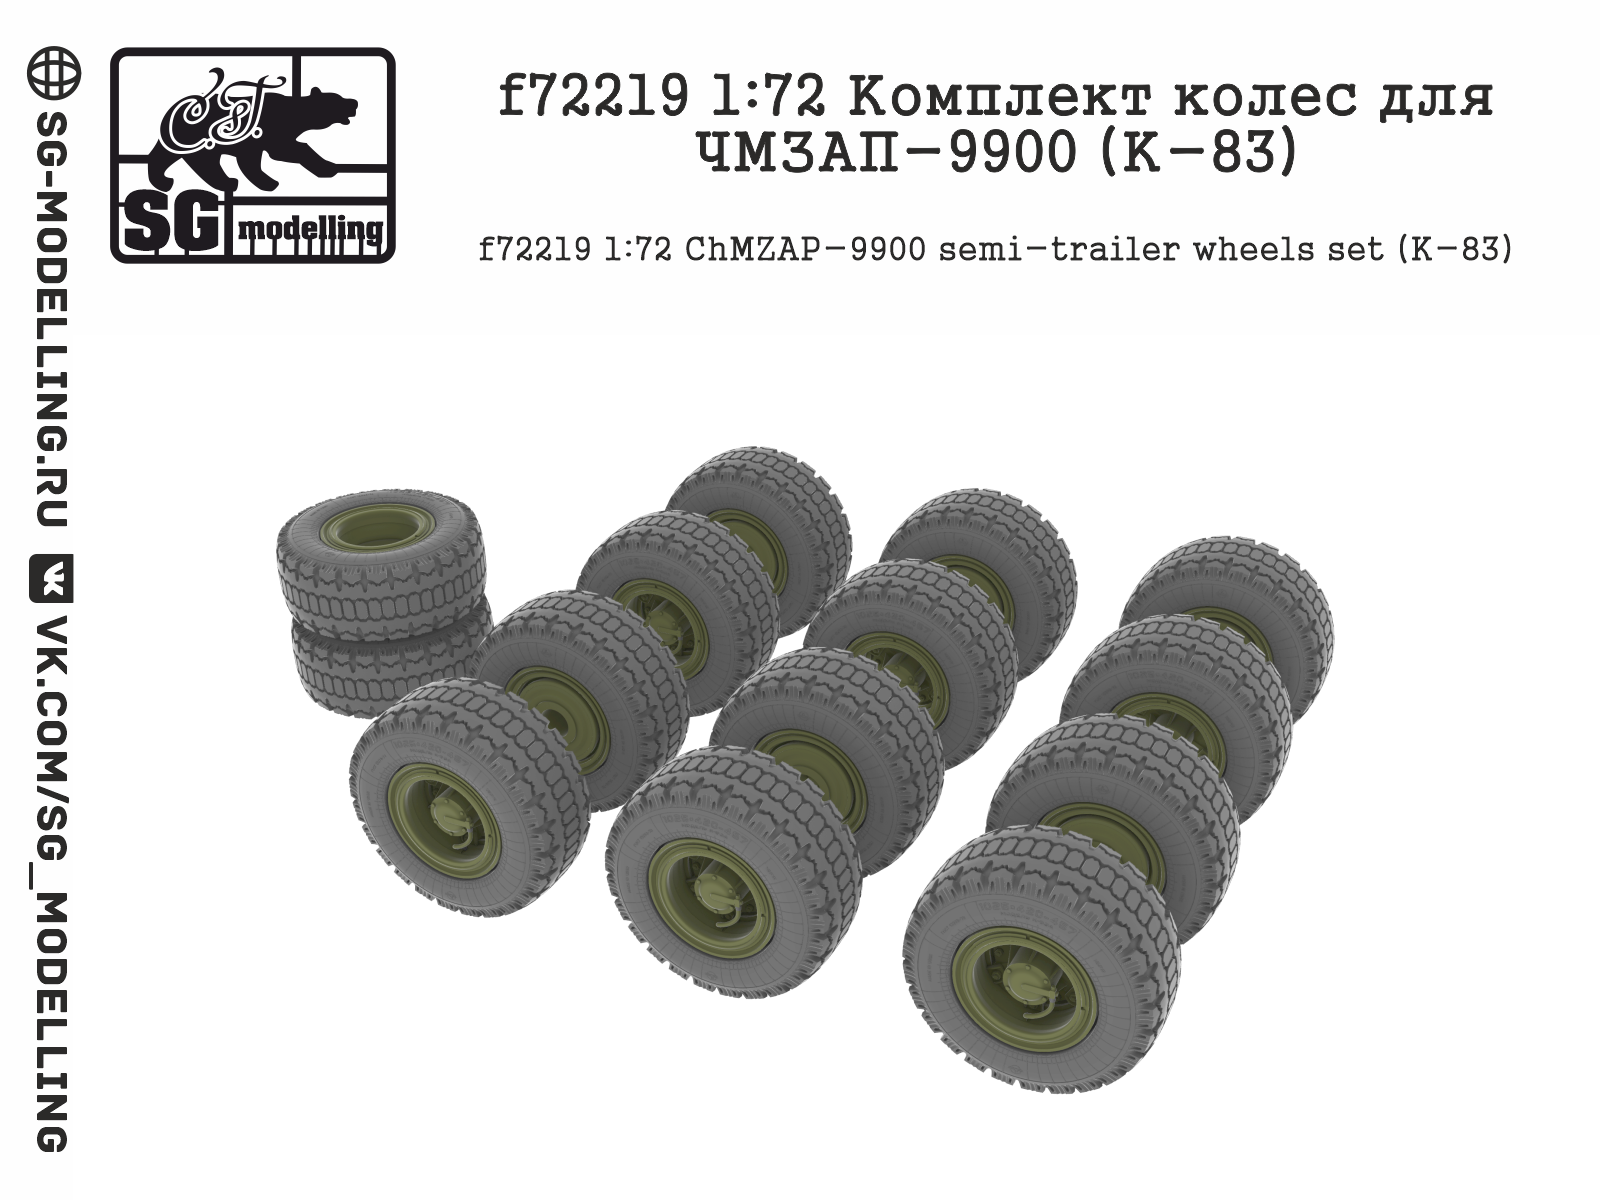 F72219 Комплект колес для ЧМЗАП-9900 (К-83)